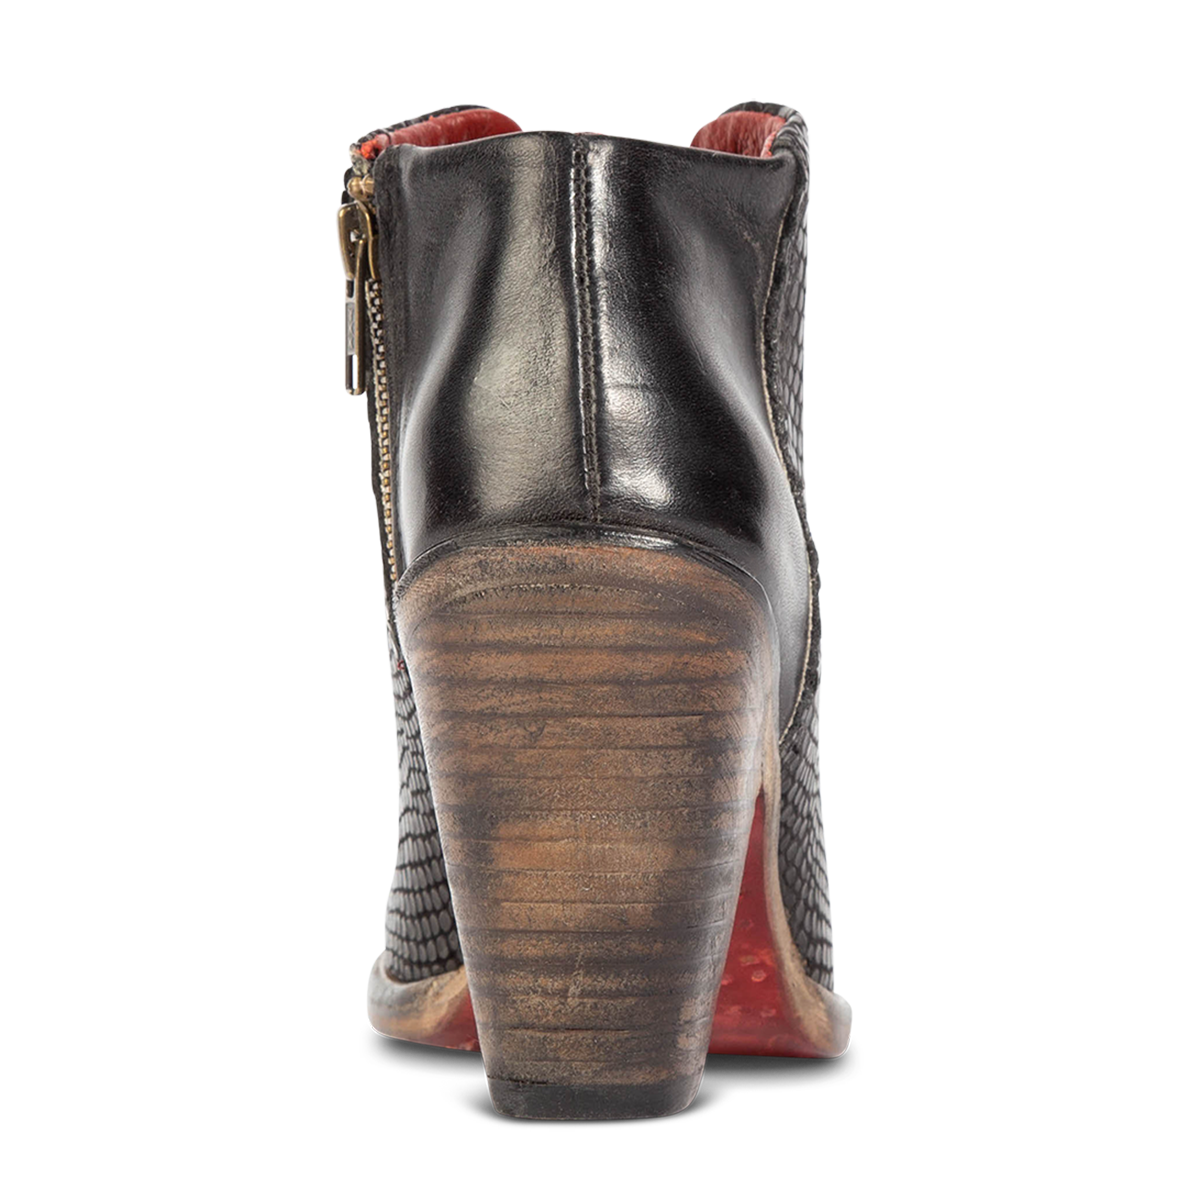 Back view showing inverted wooden heel on FREEBIRD women's Detroit black snake bootie